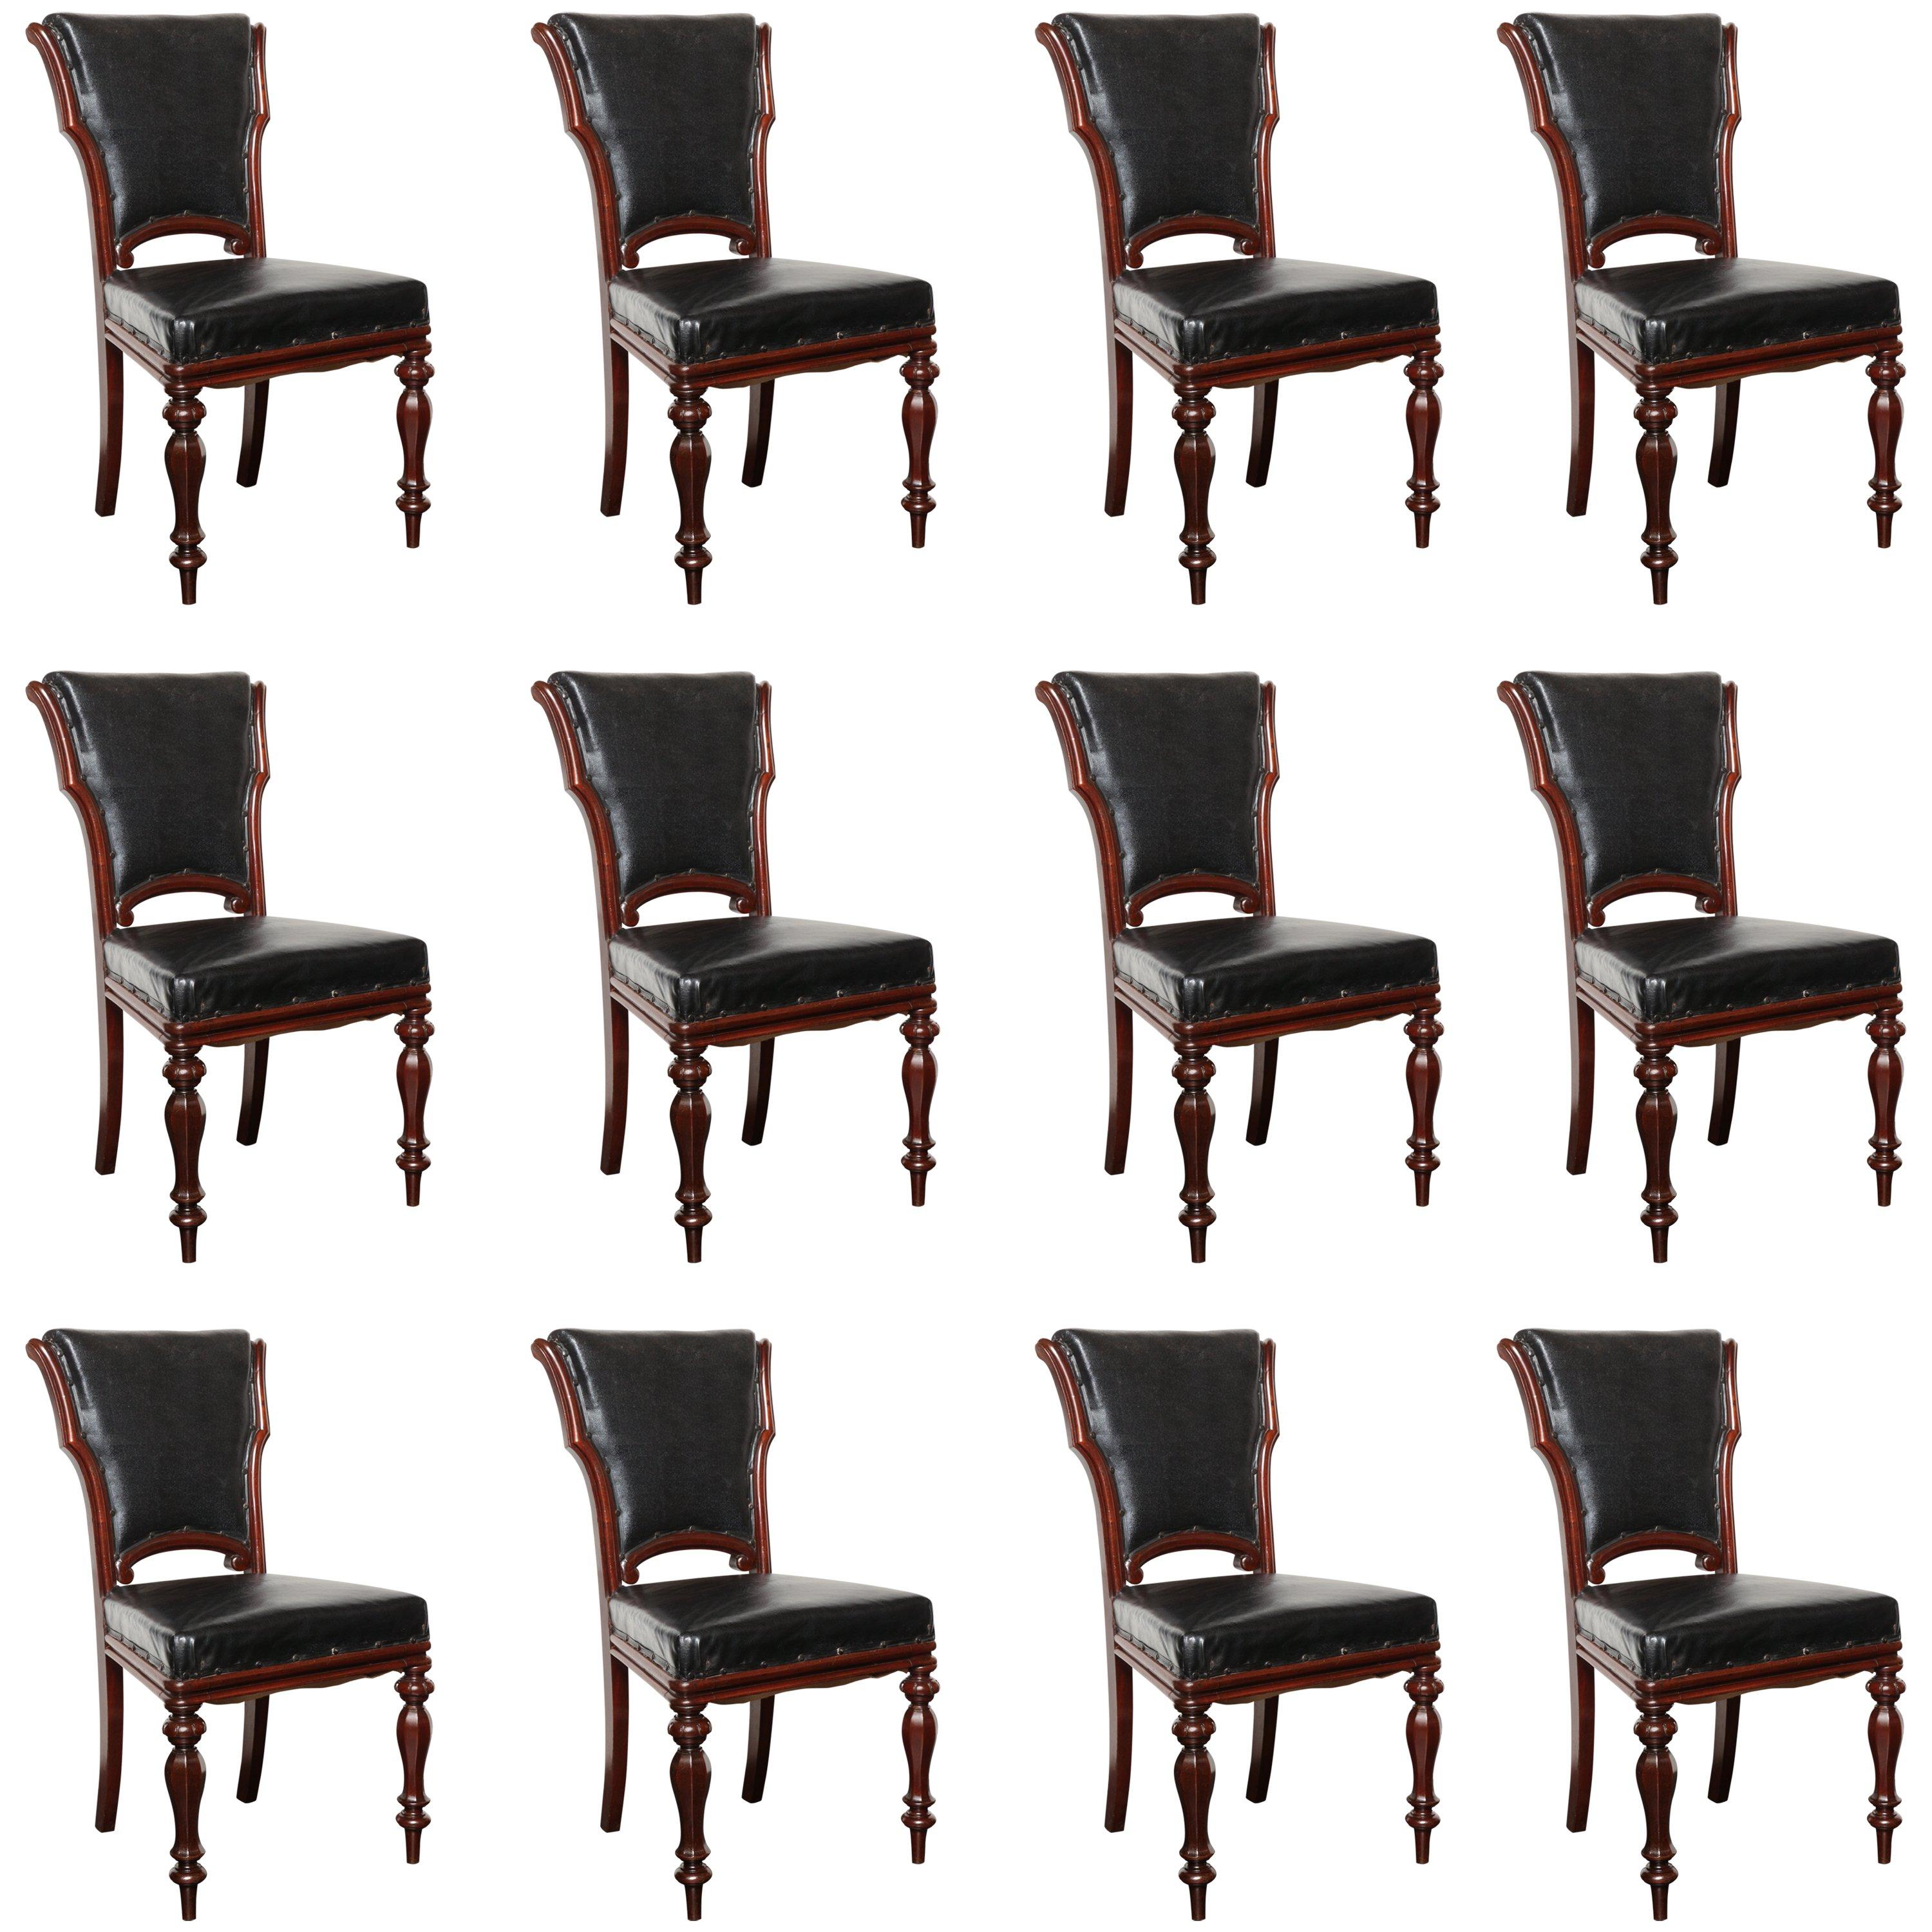 Set of 12, Mid-19th Century Irish, Mahogany Dining Chairs